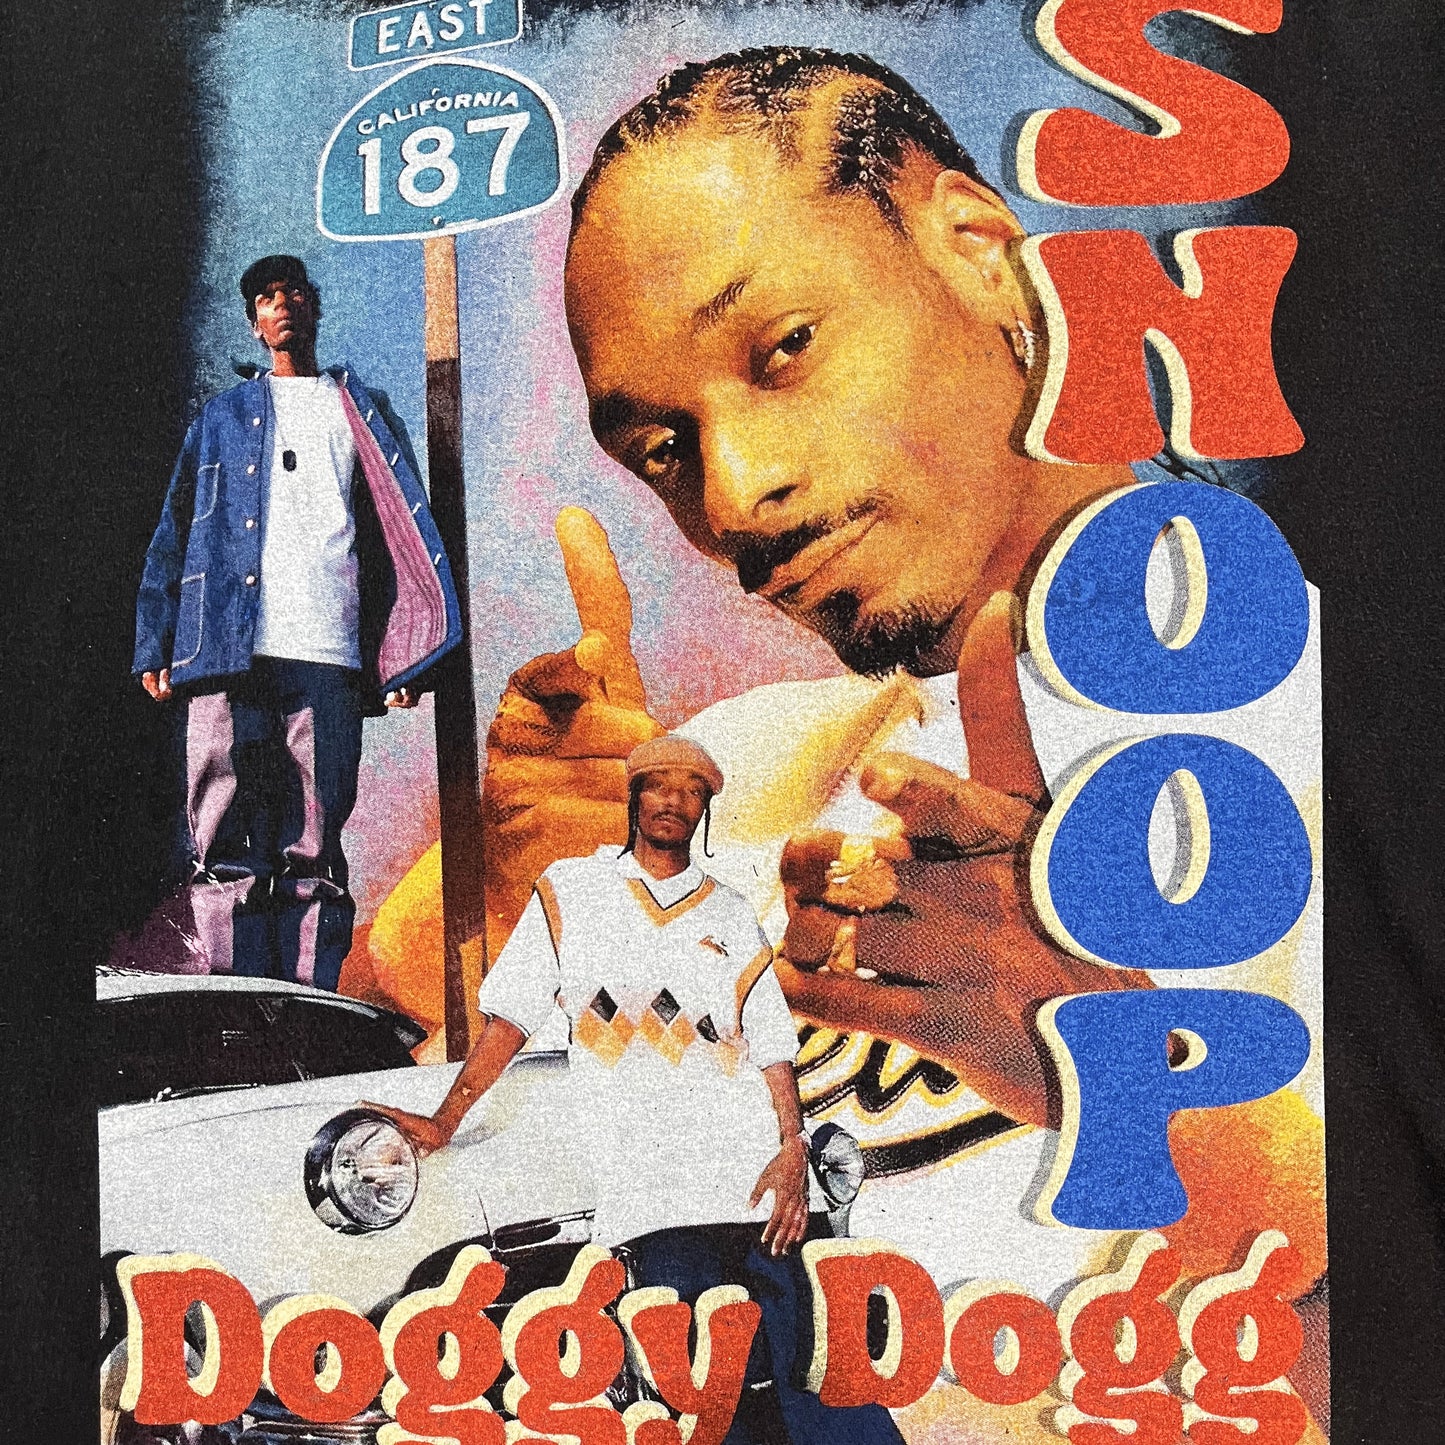 Snoop Dogg T-Shirt - XL